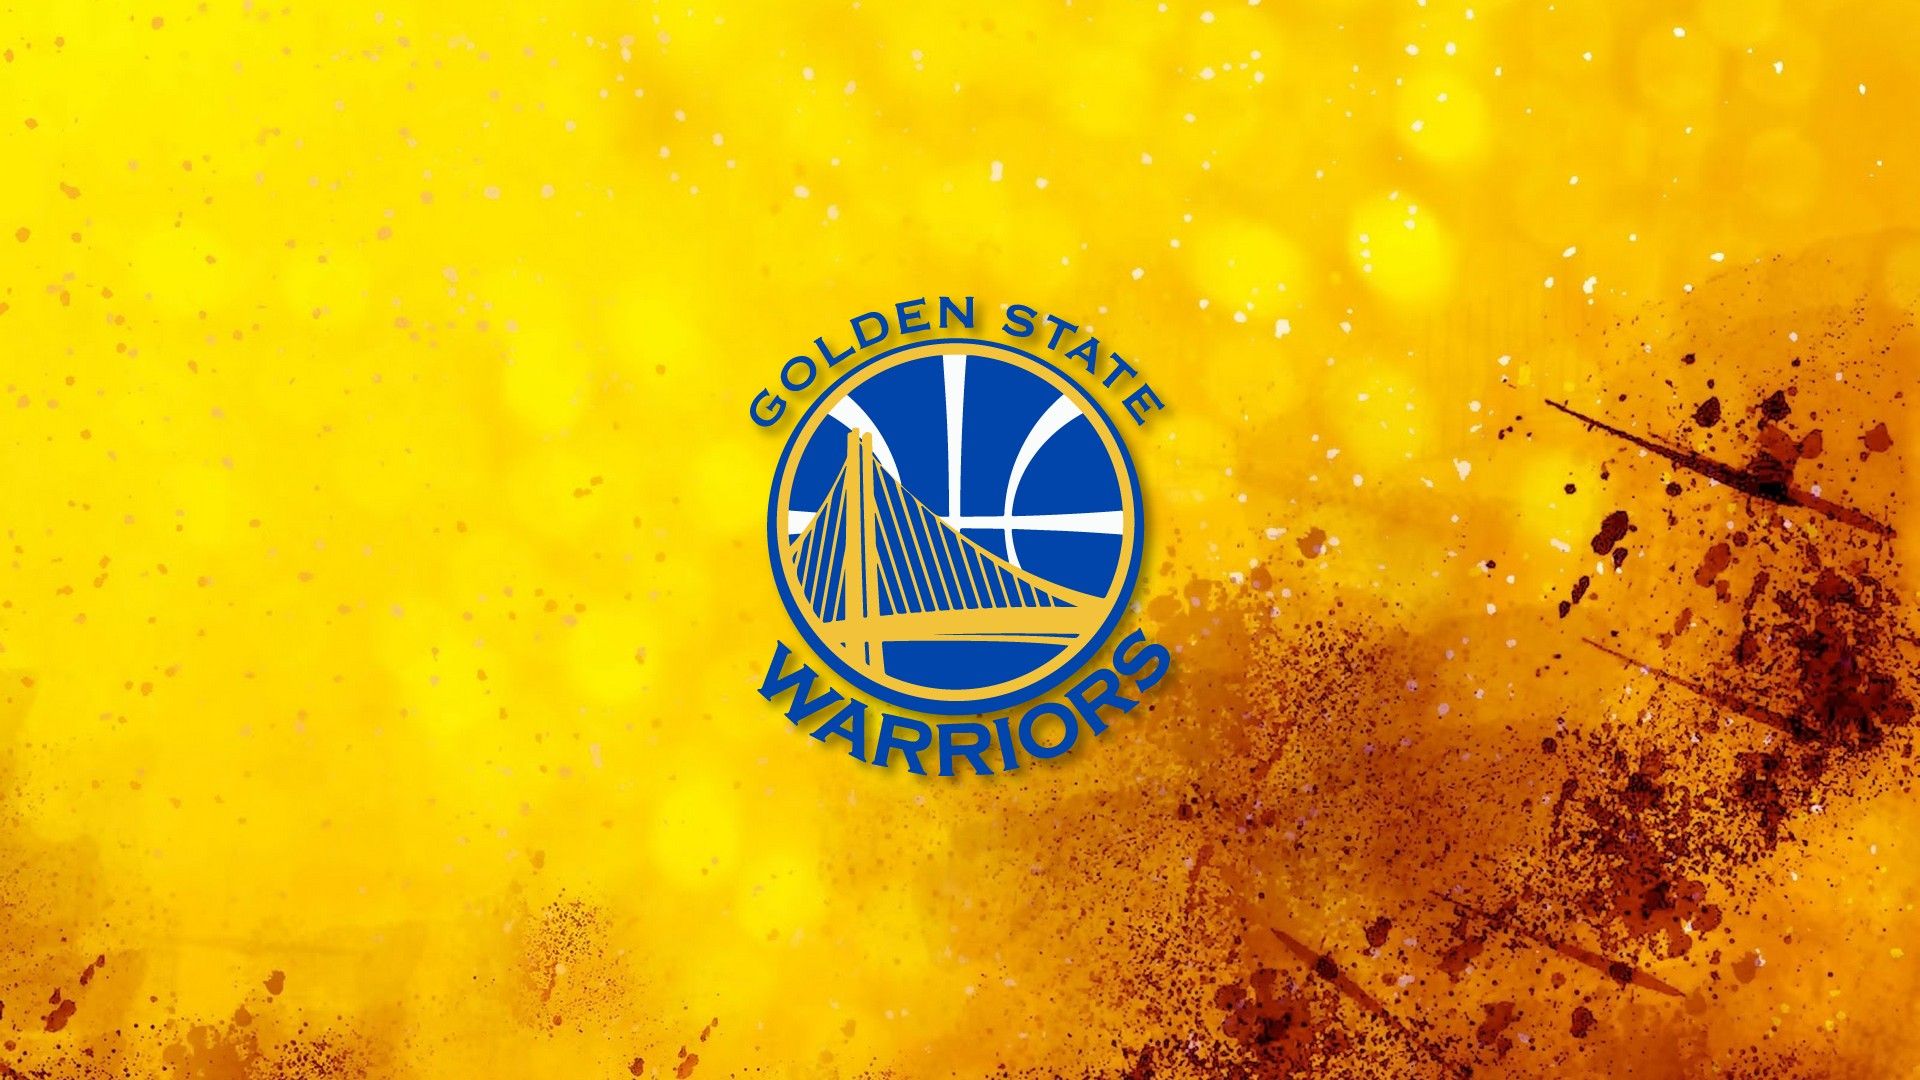 Golden State Warriors 2021 Wallpapers